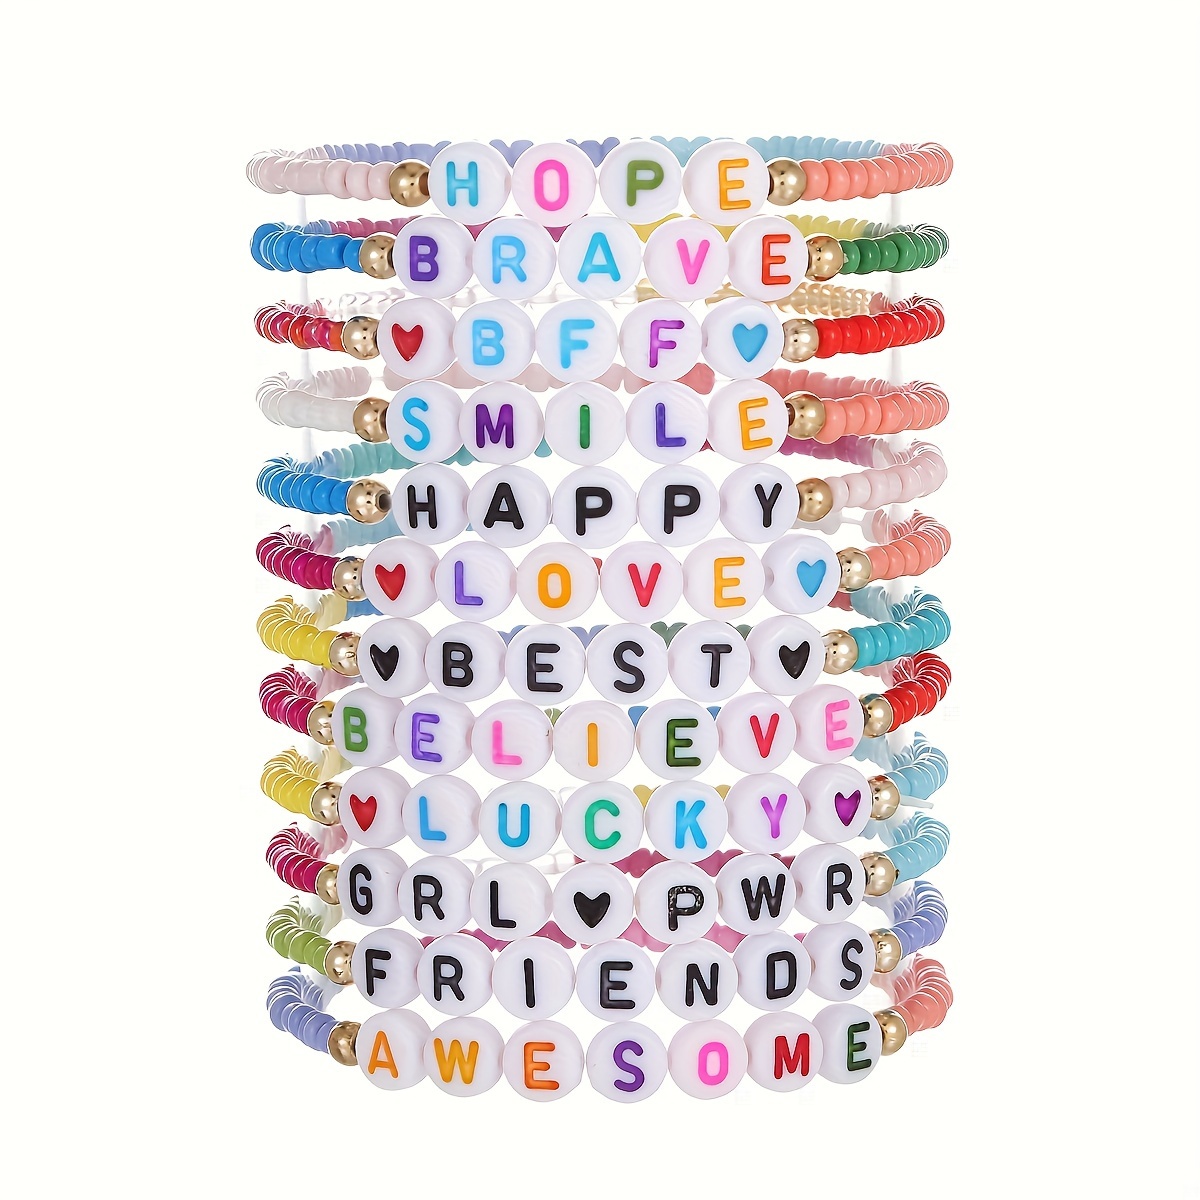 

48pcs Boho Style Friendship Bracelet Set With Colorful Soft Clay Beads